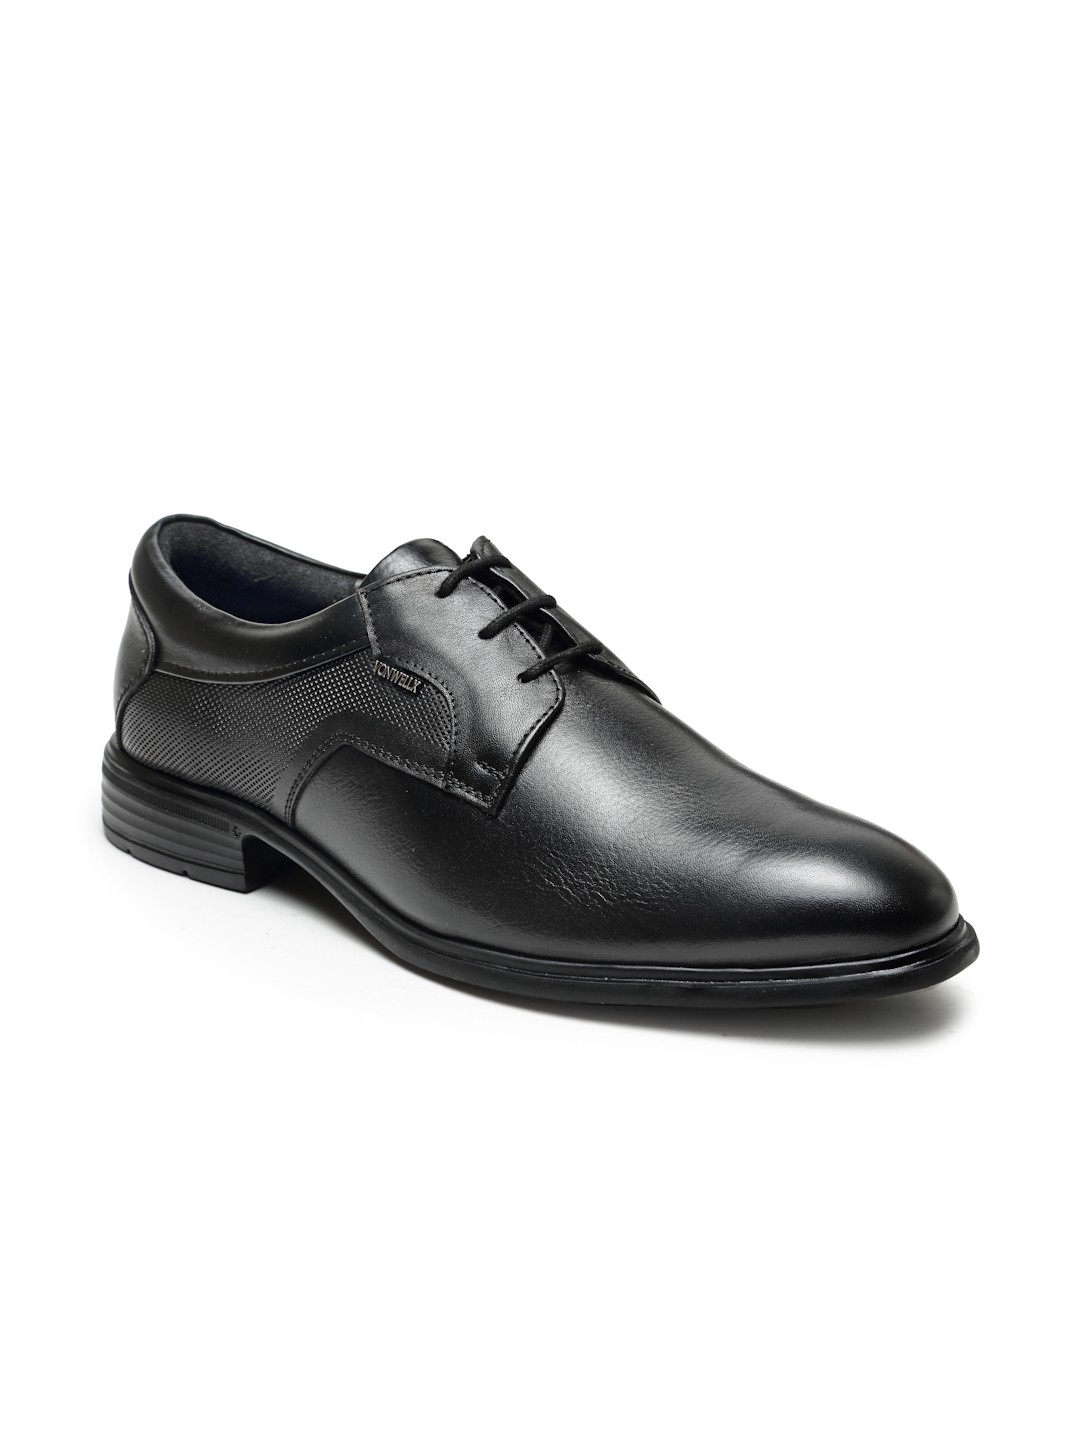 Buy Von Wellx Germany Comfort Men's Black Formal Shoes Adler Online in Oman